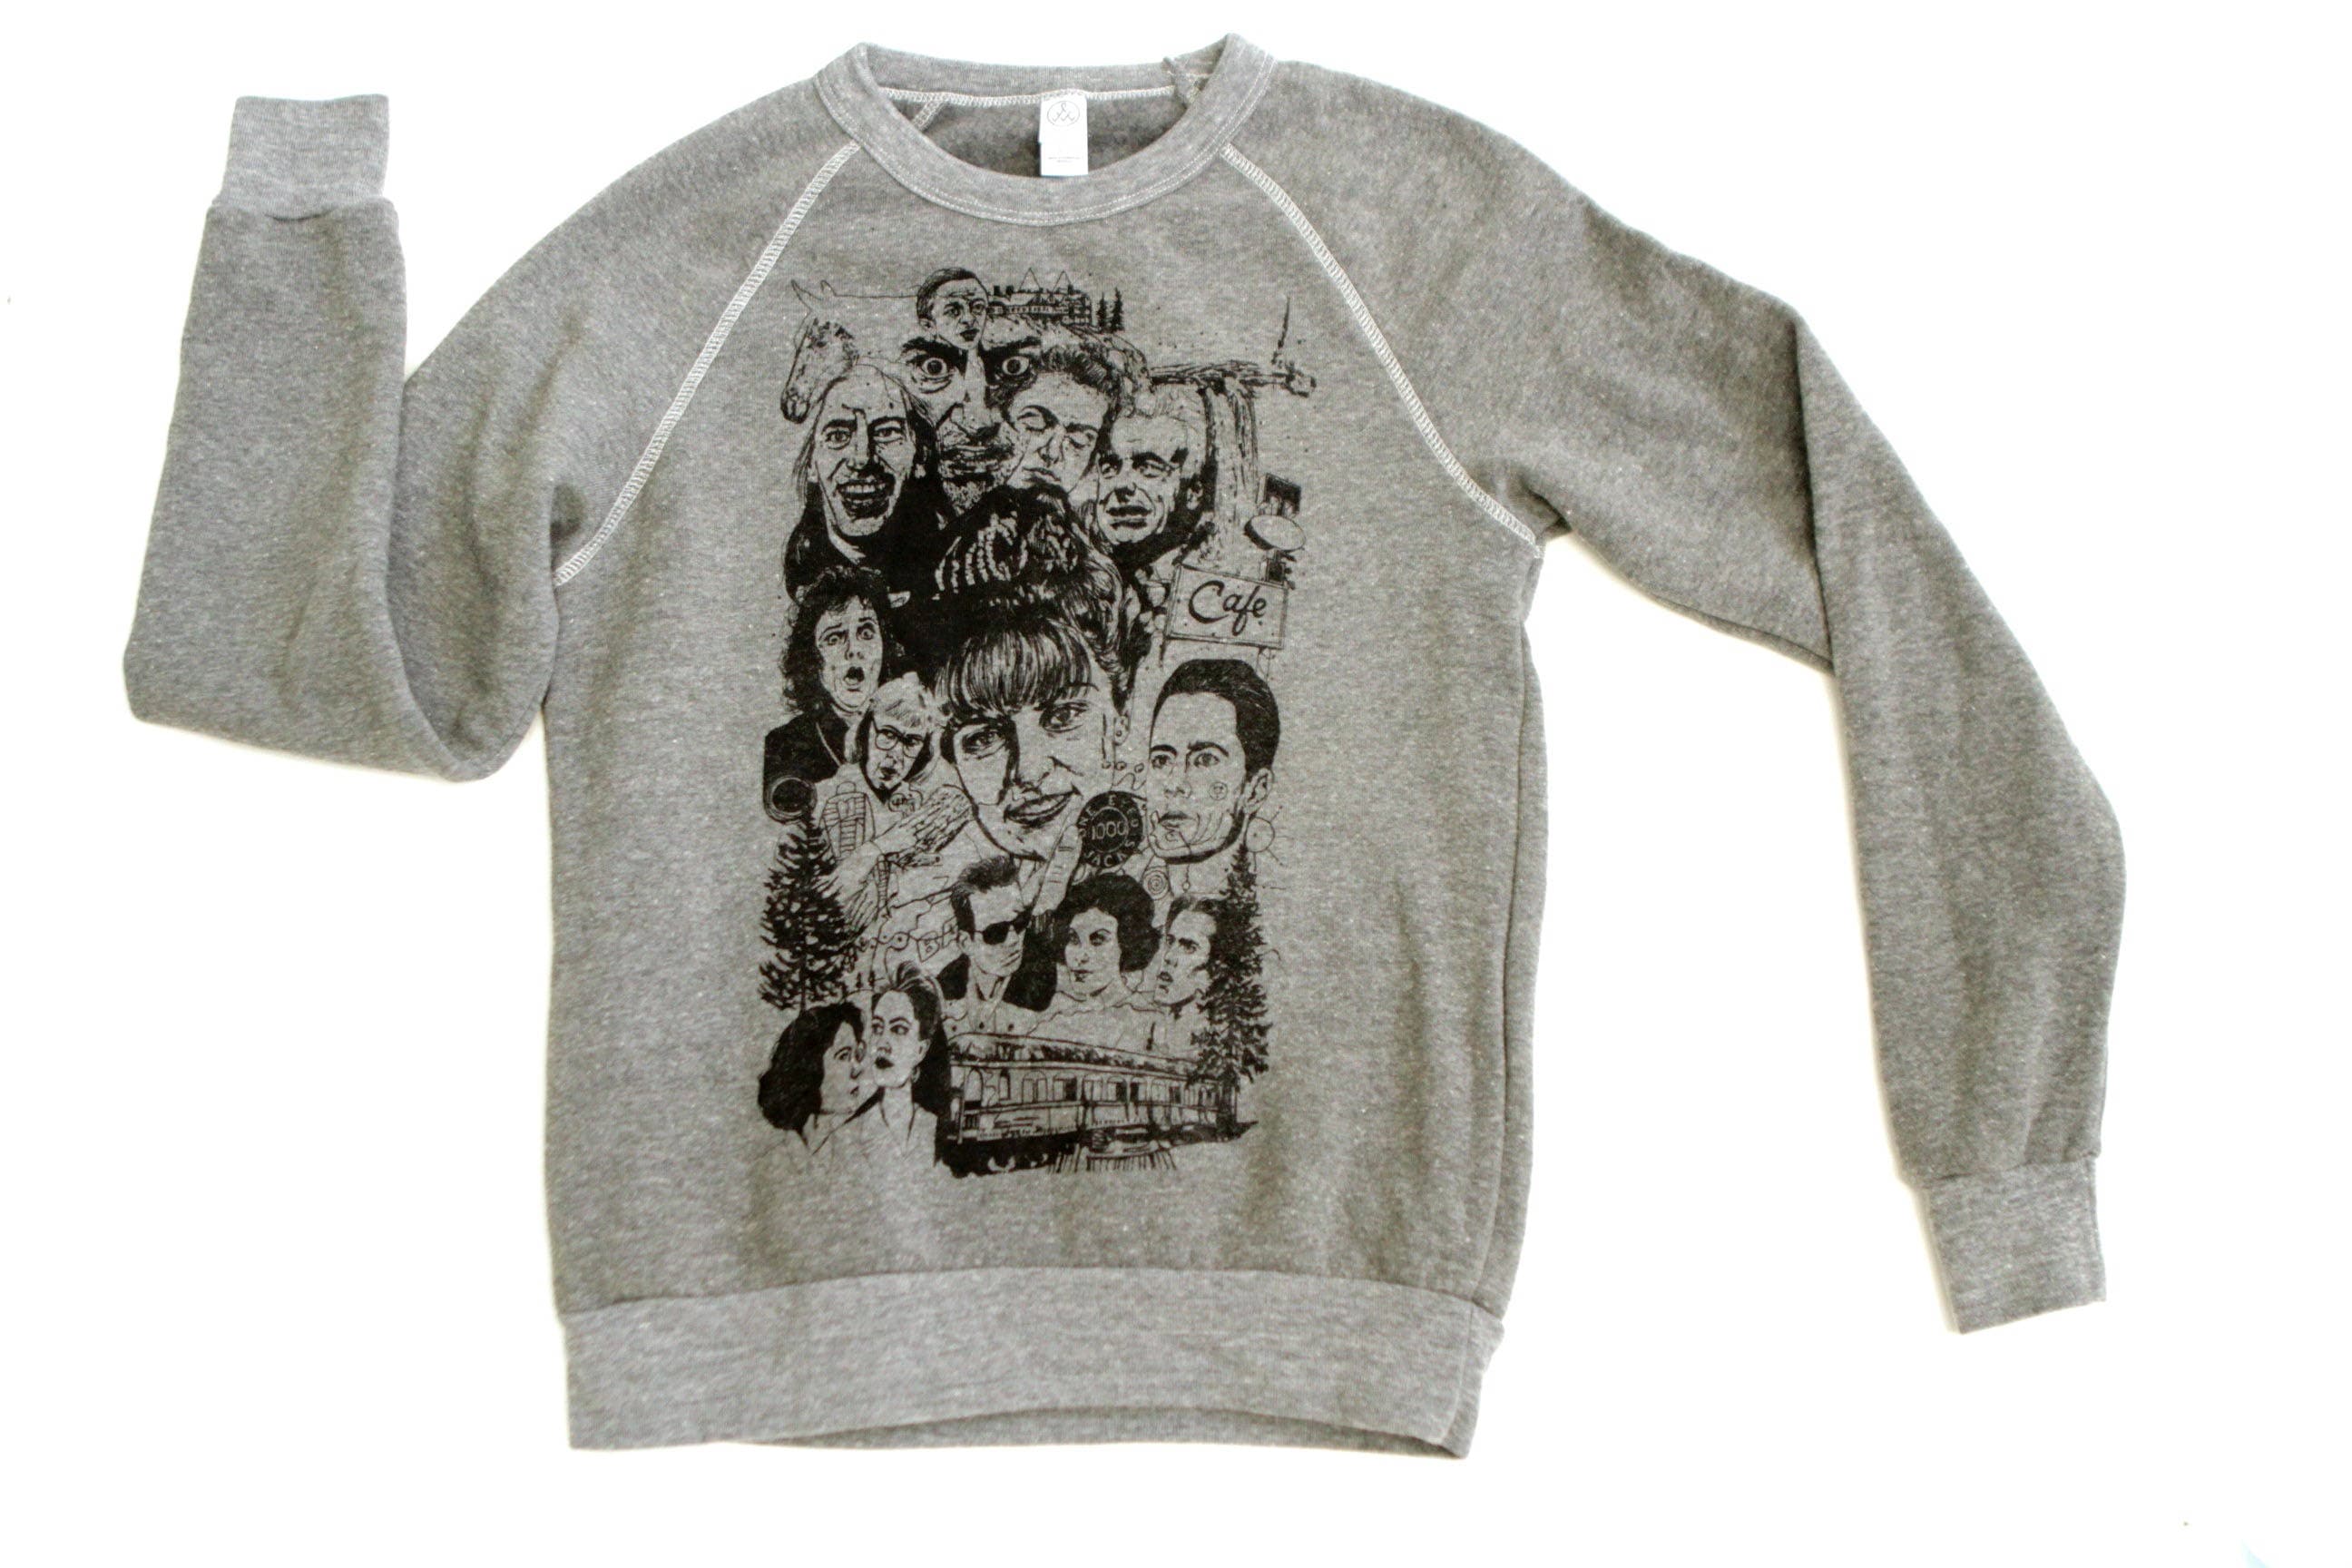 TWIN PEAKS brand new SOFT sweatshirt 90s era characters